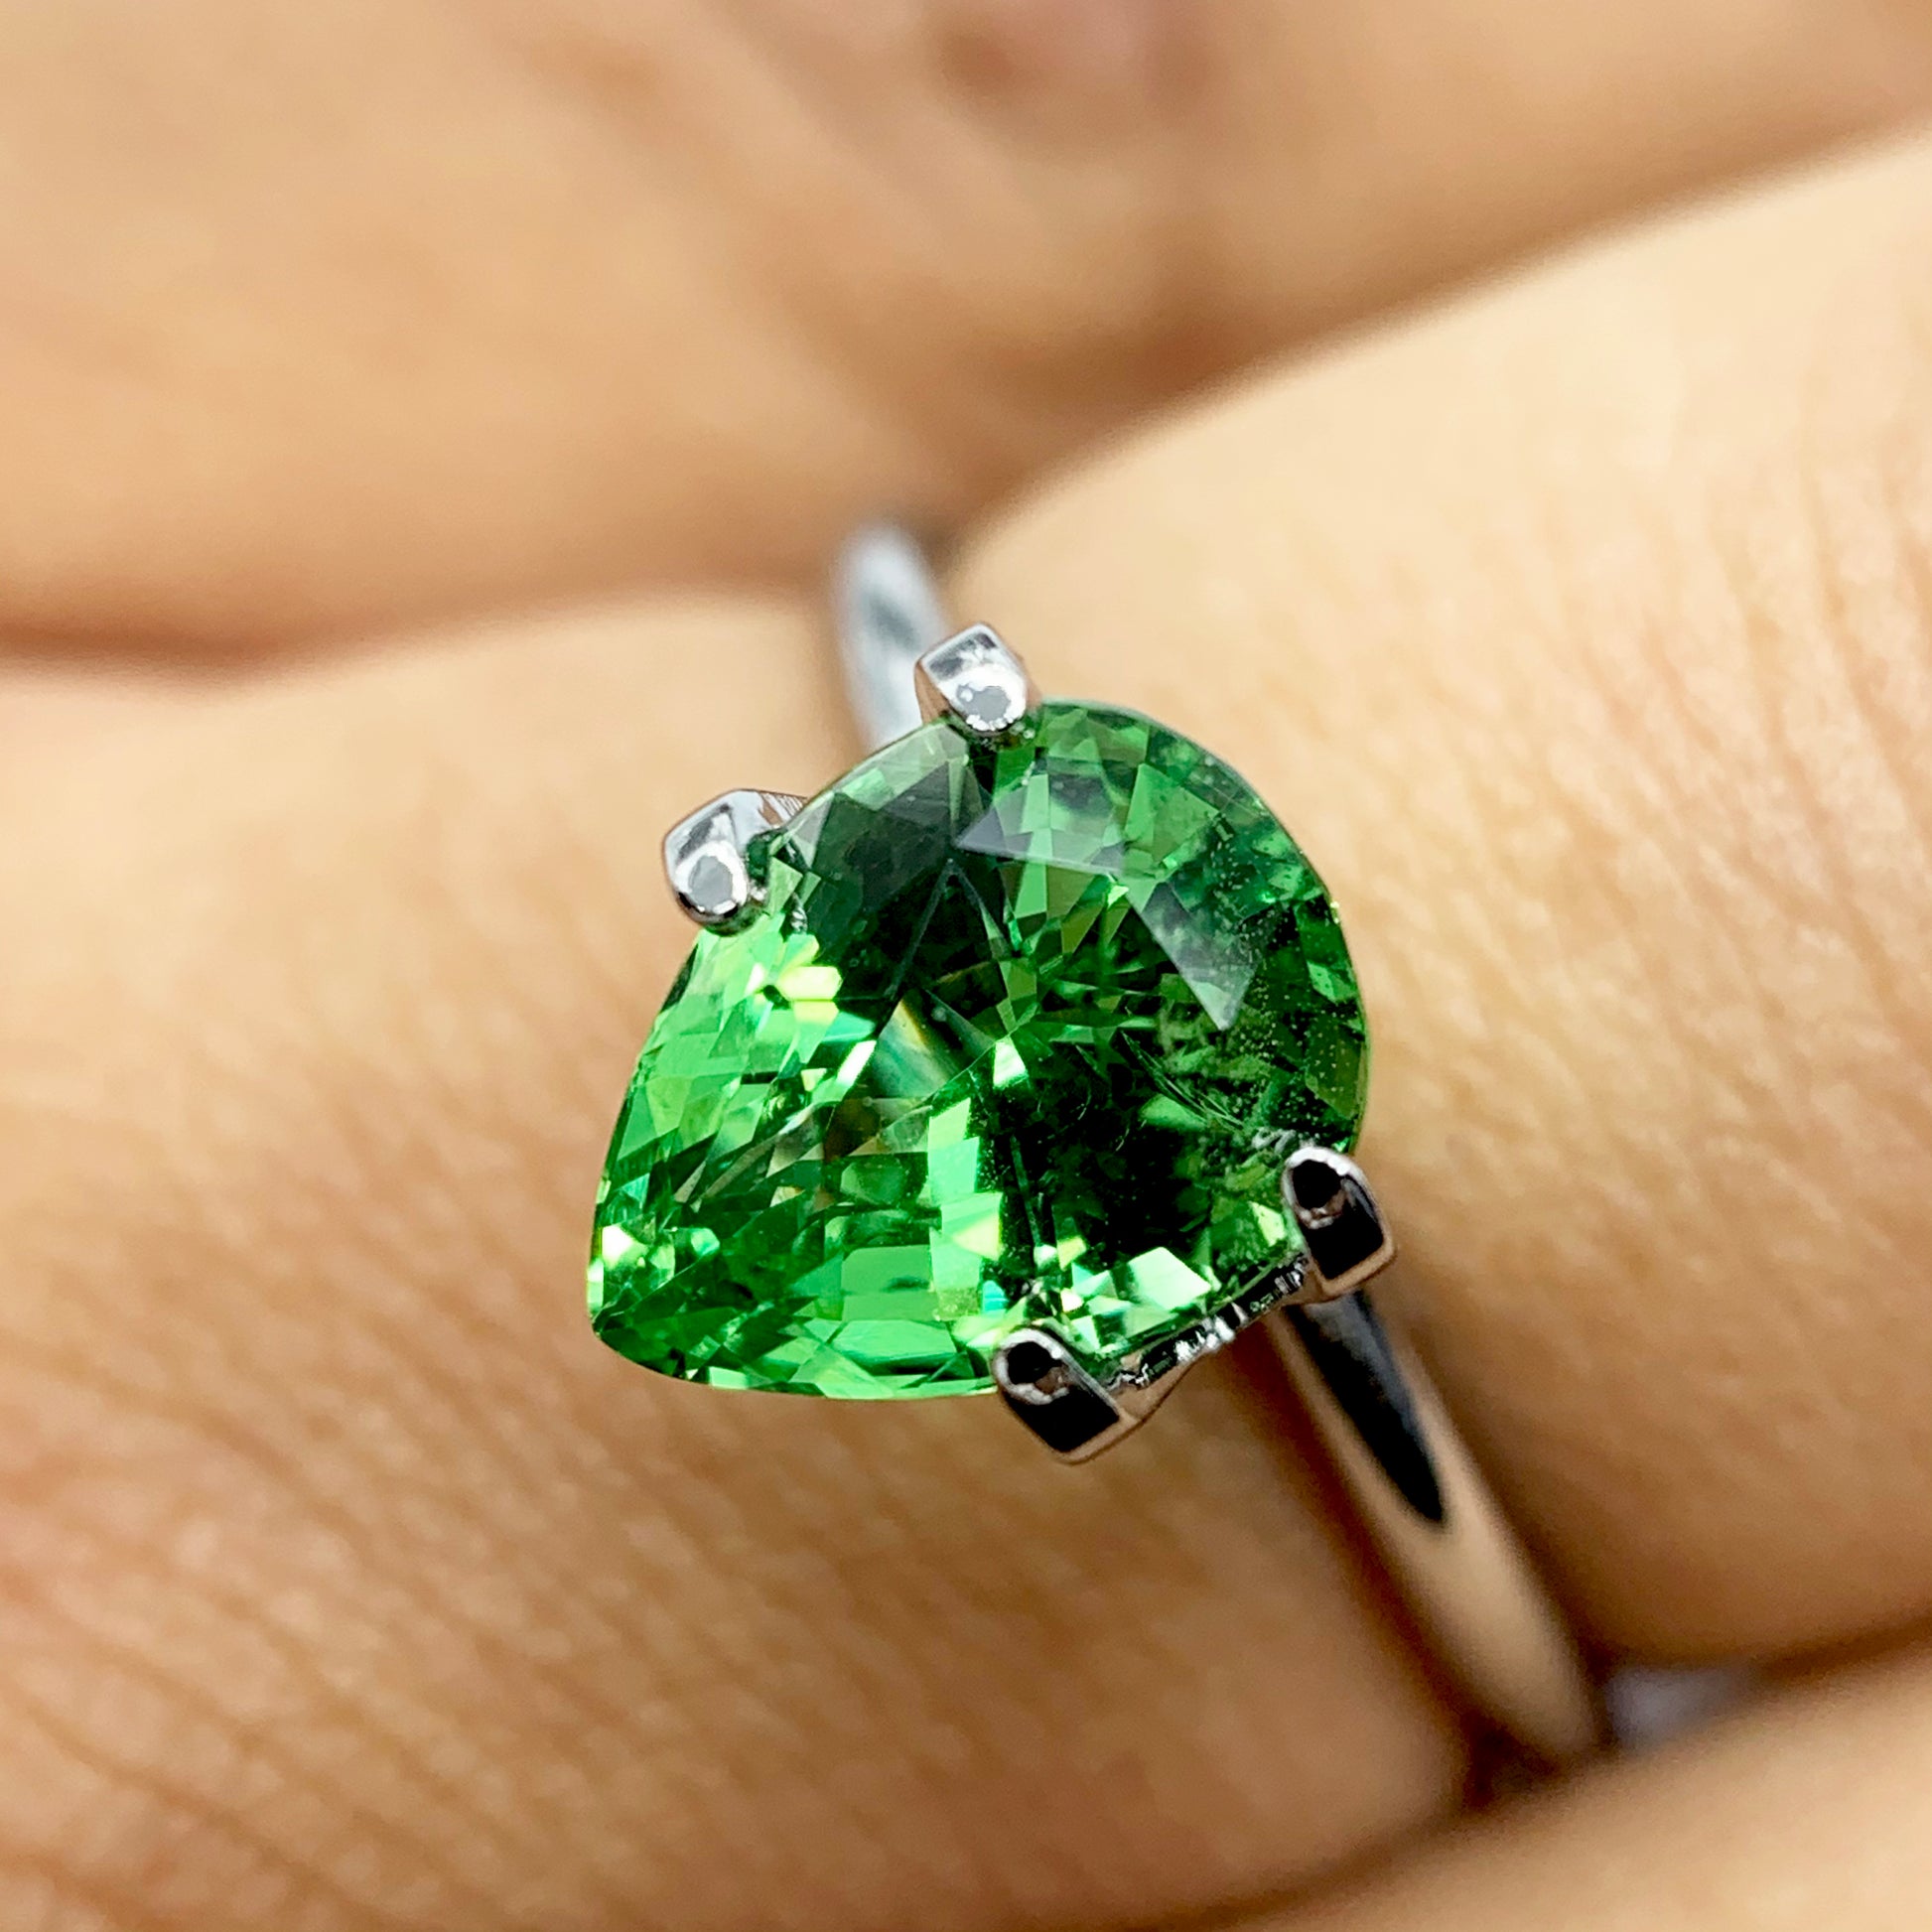 Vivid Green Natural Tsavorire 2.14 crt. for engagement rings, Jewelry, custom jewelry, loose gemstone